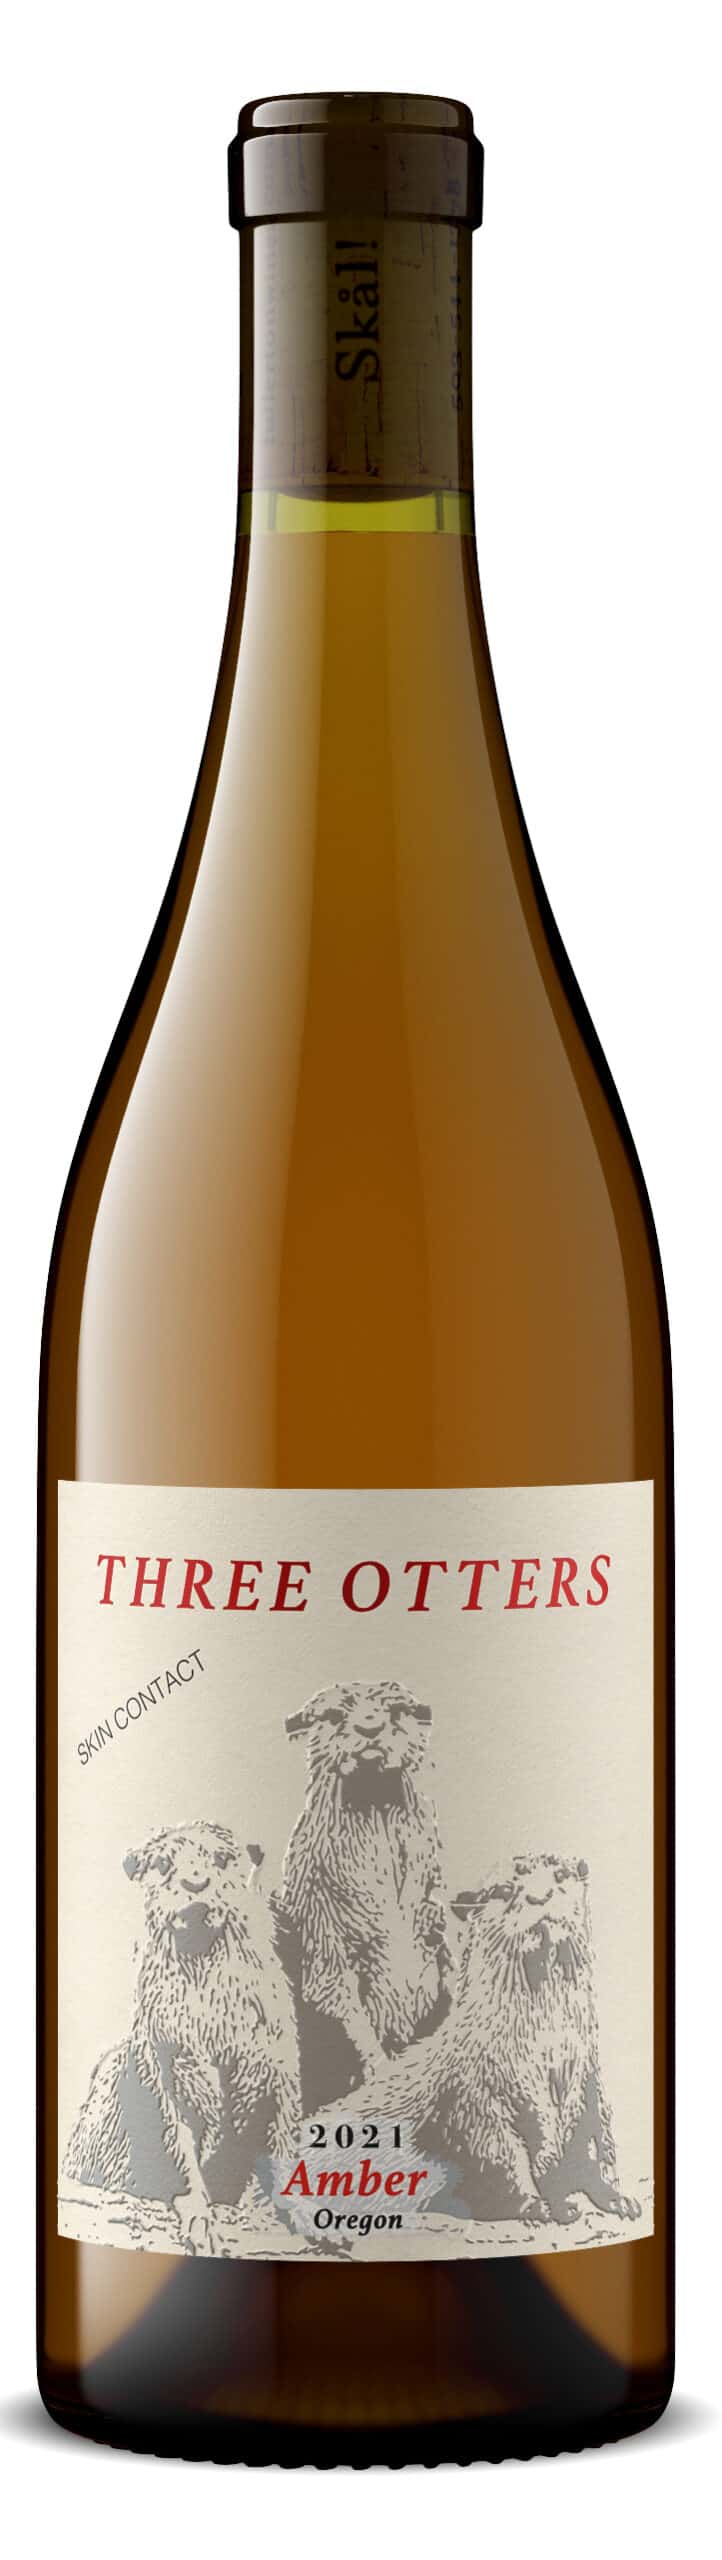 2021 Three Otters Amber